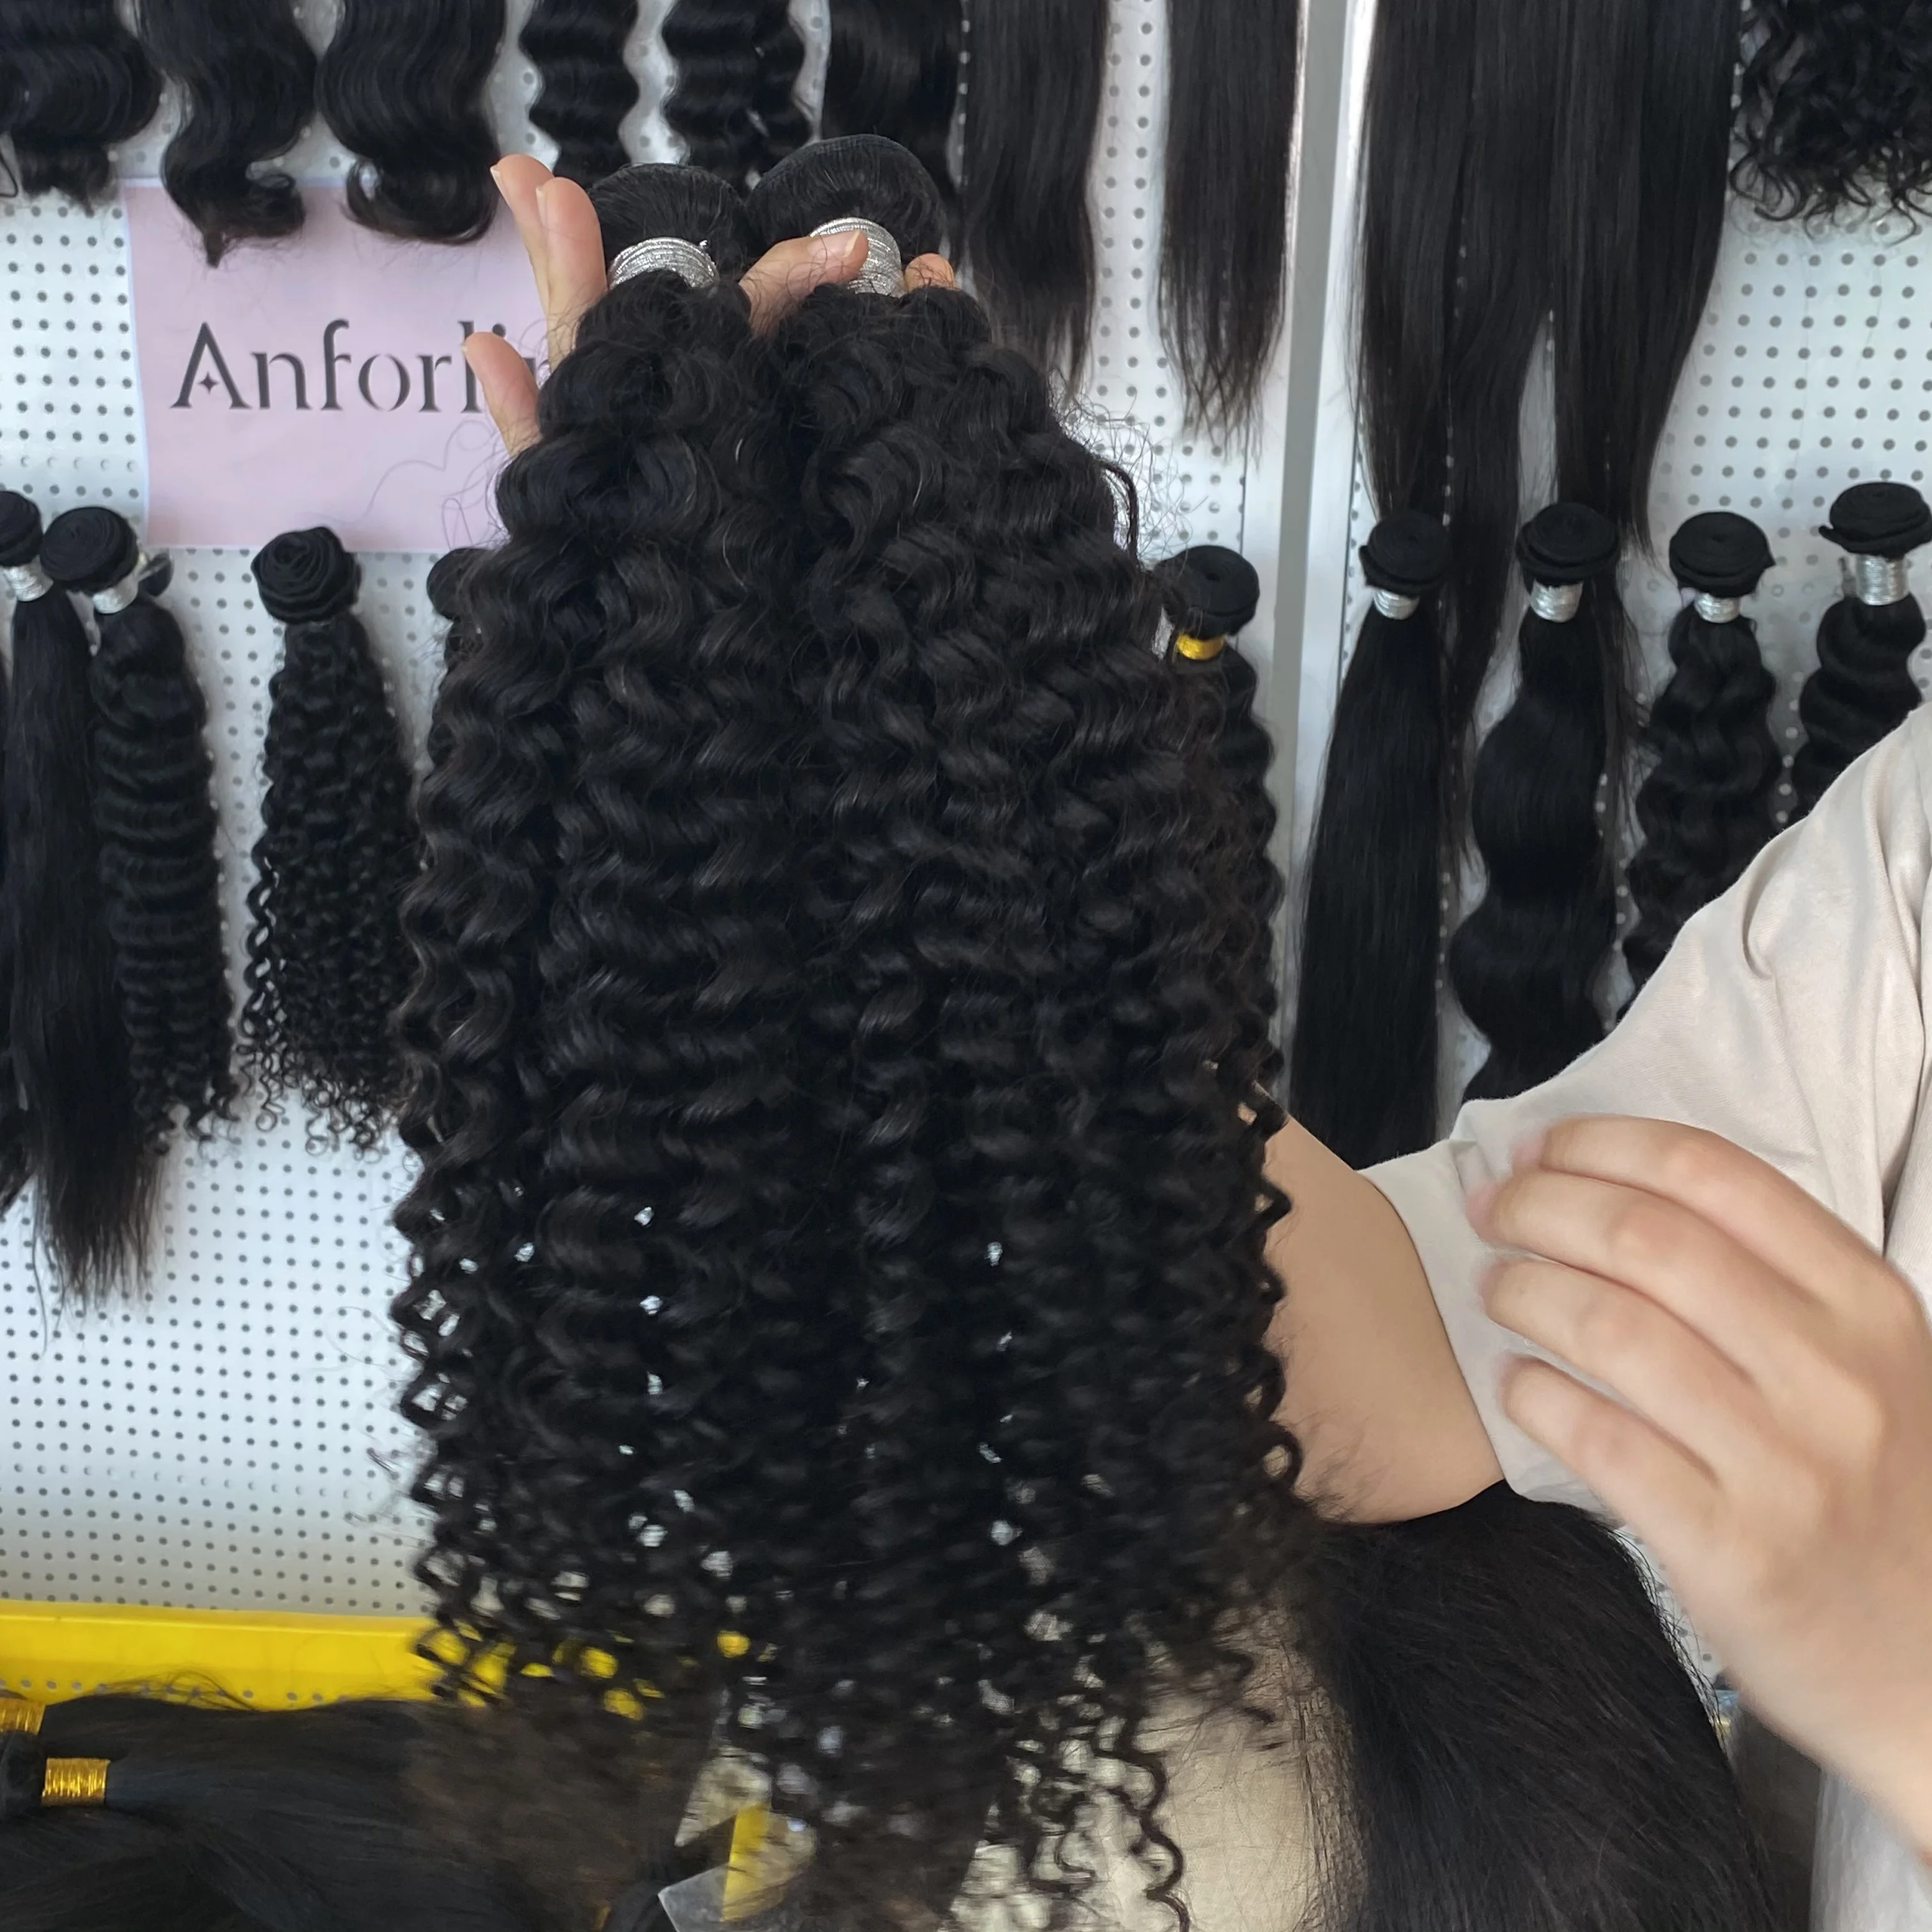 

Free Sample Cheap Brazilian Virgin Human Hair Bundles Short Bob Raw Kinky Curly Braids Hair Extensions Wigs Vendors